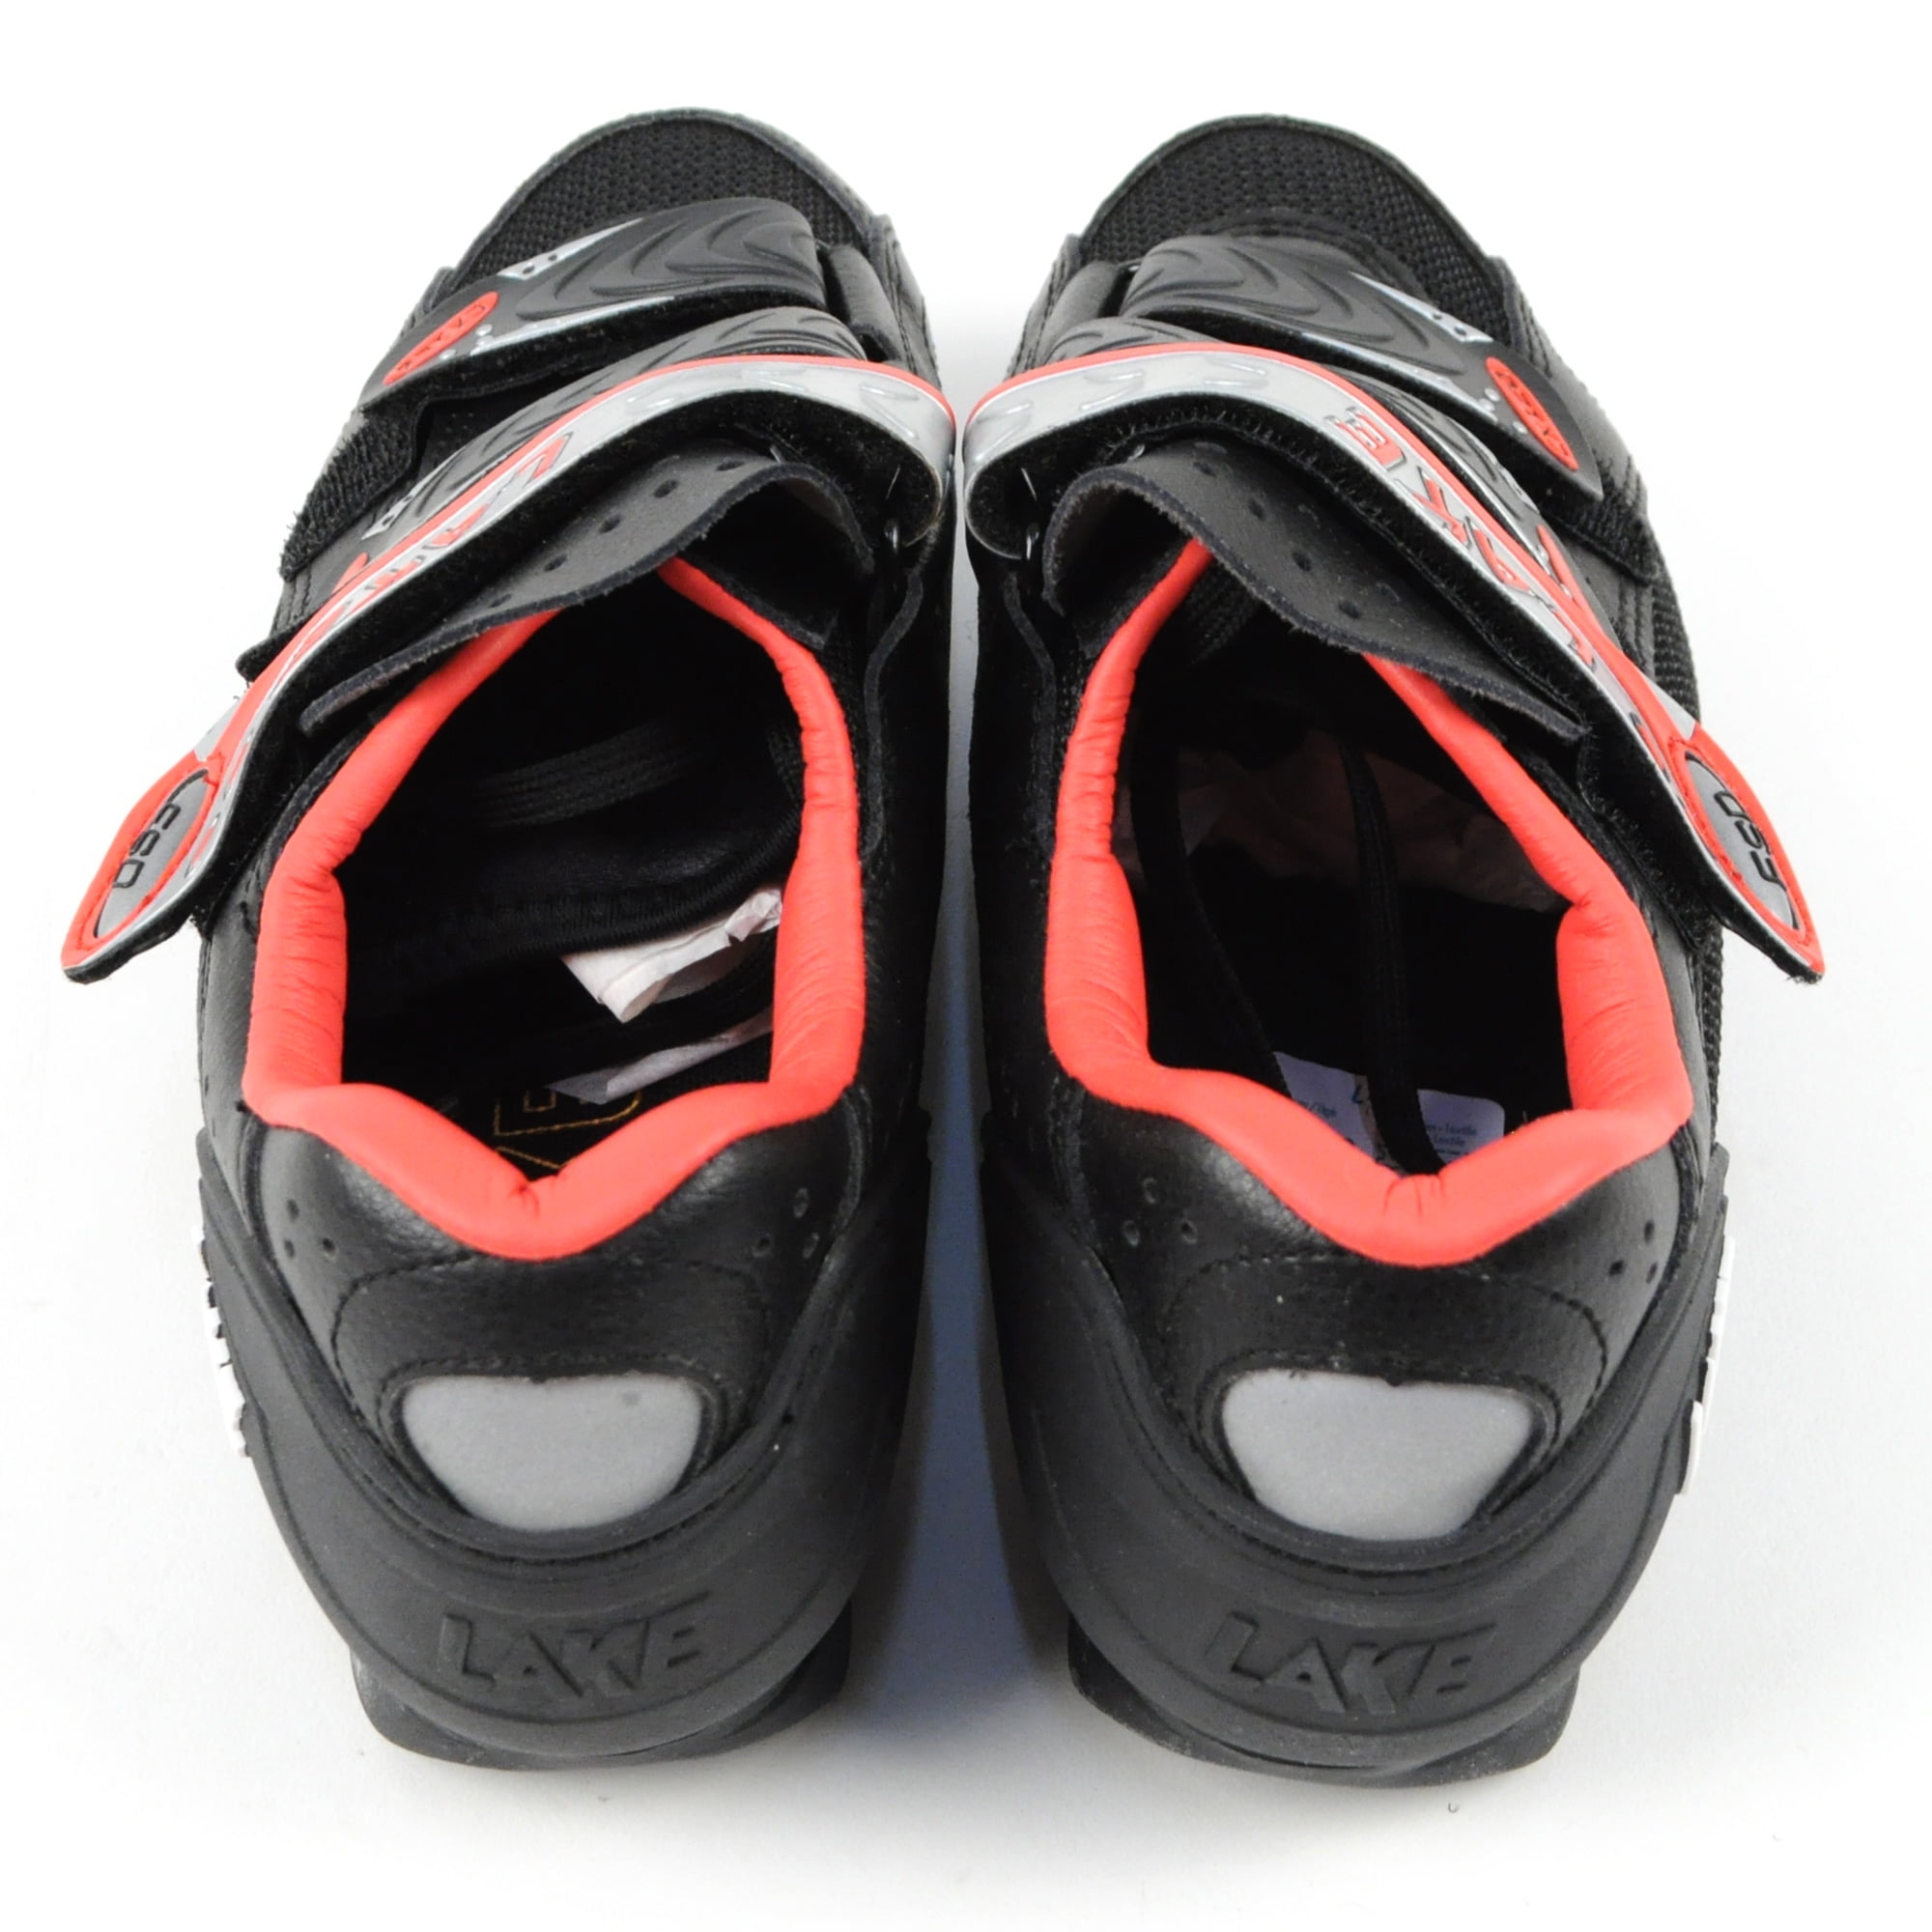 Lake CX 120 Black/Red MTB Cycling Shoes Size 39 